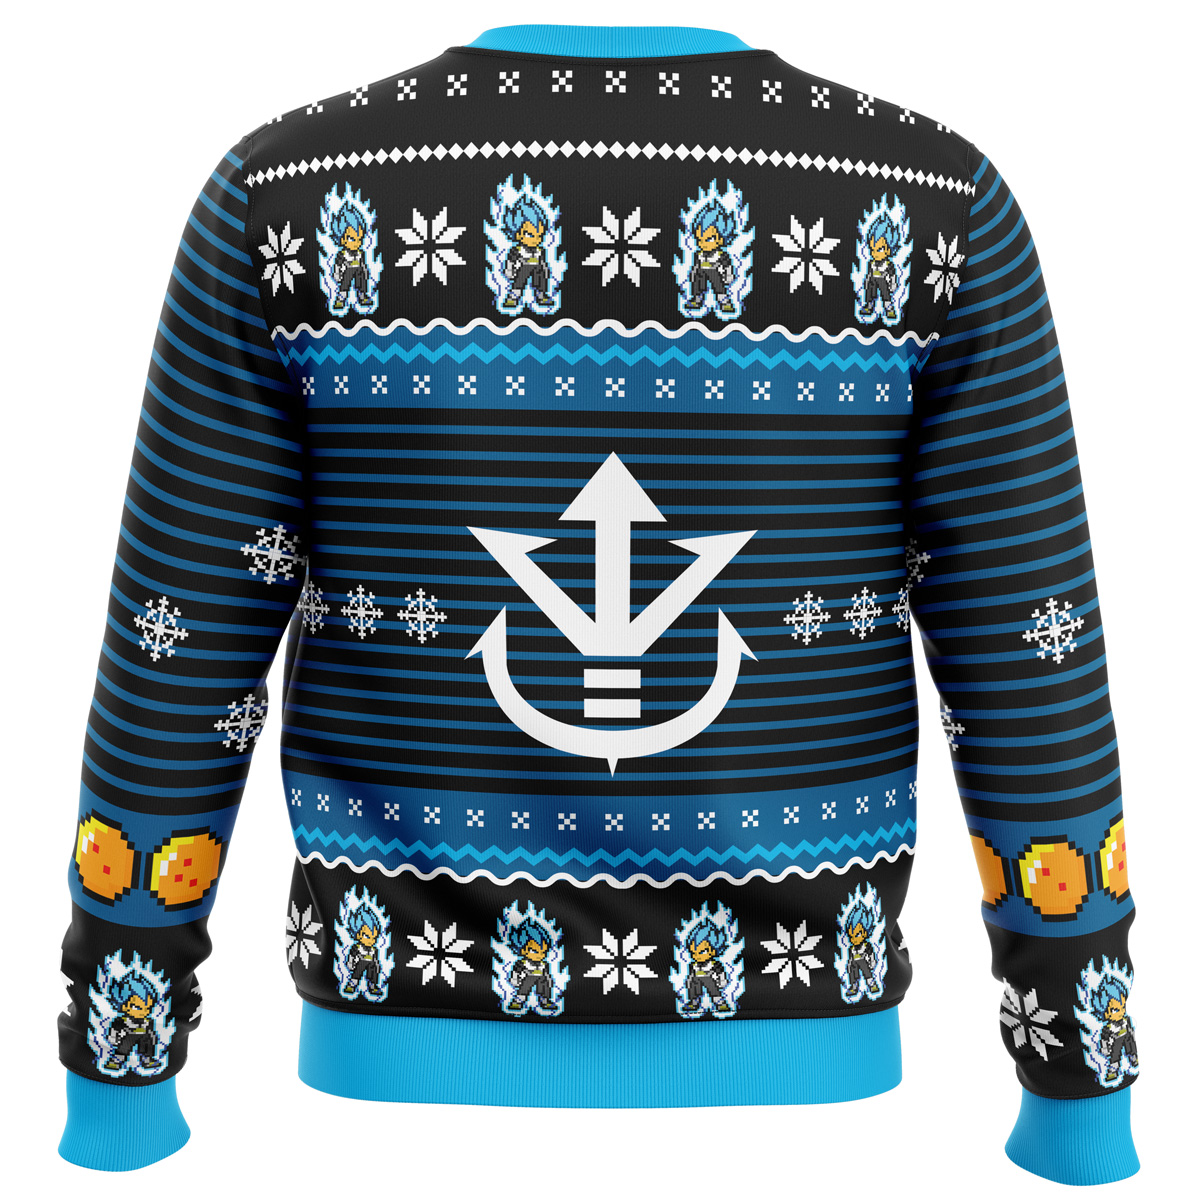 Super Saiyan Blue Vegeta Ugly Christmas Sweater